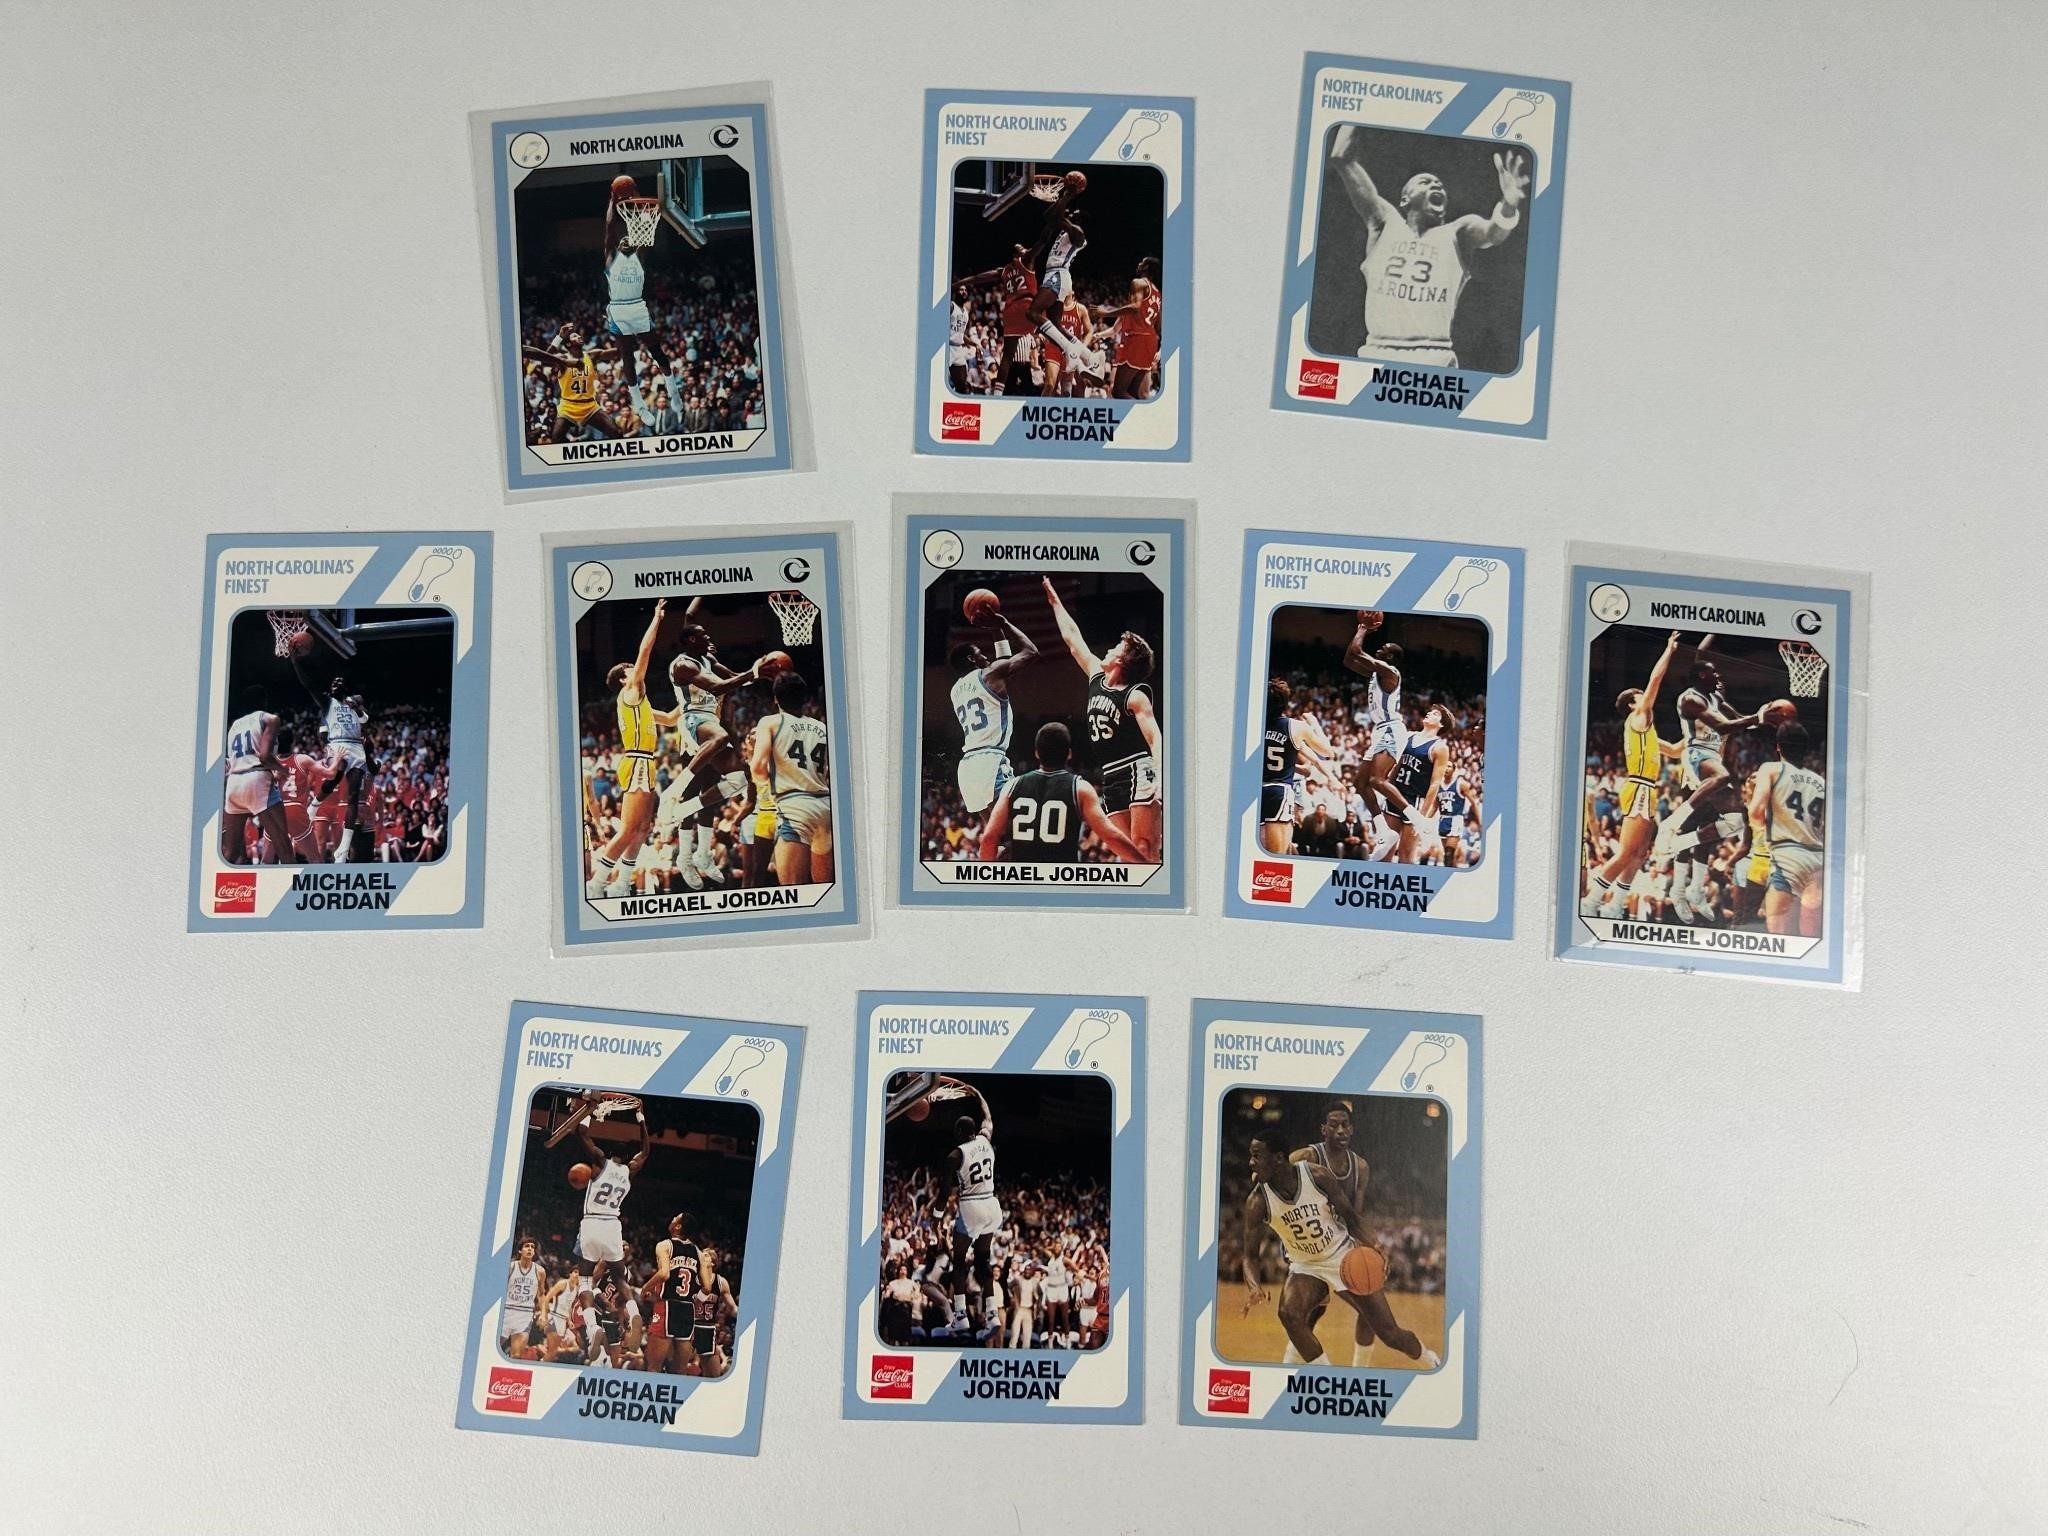 Michael Jordan North Carolina cards